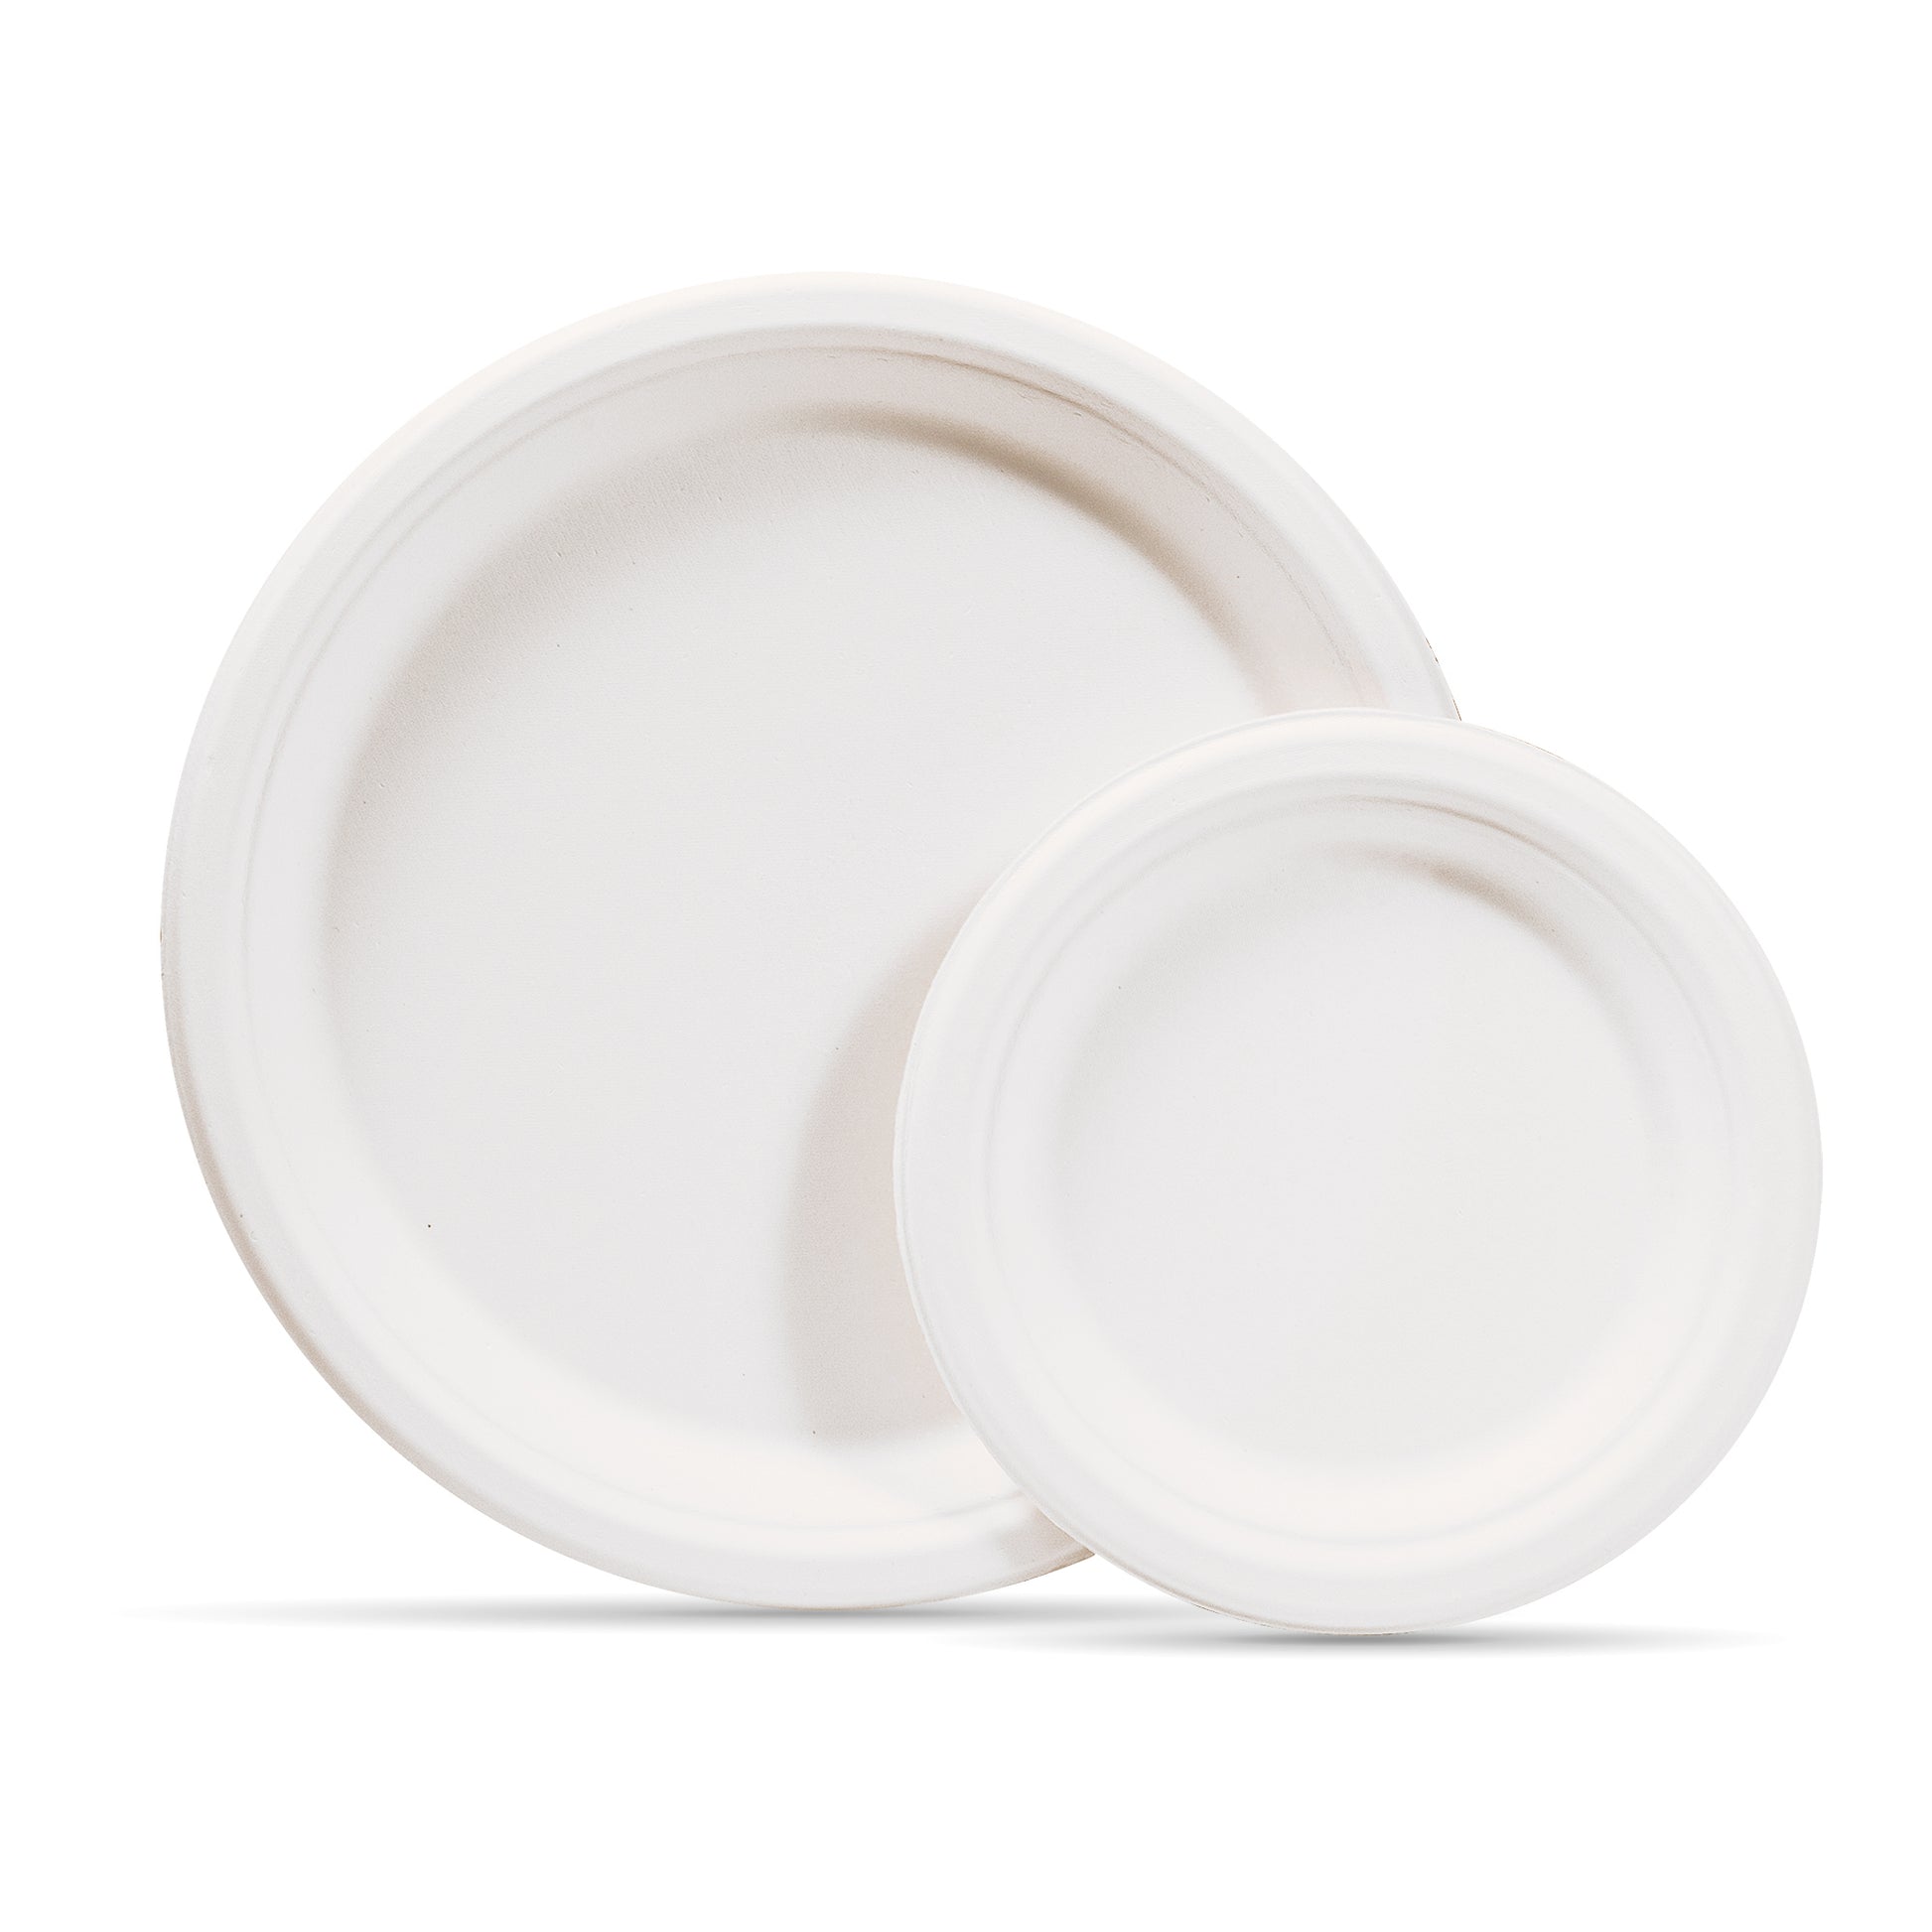 Biodegradable Eco-Friendly Plates